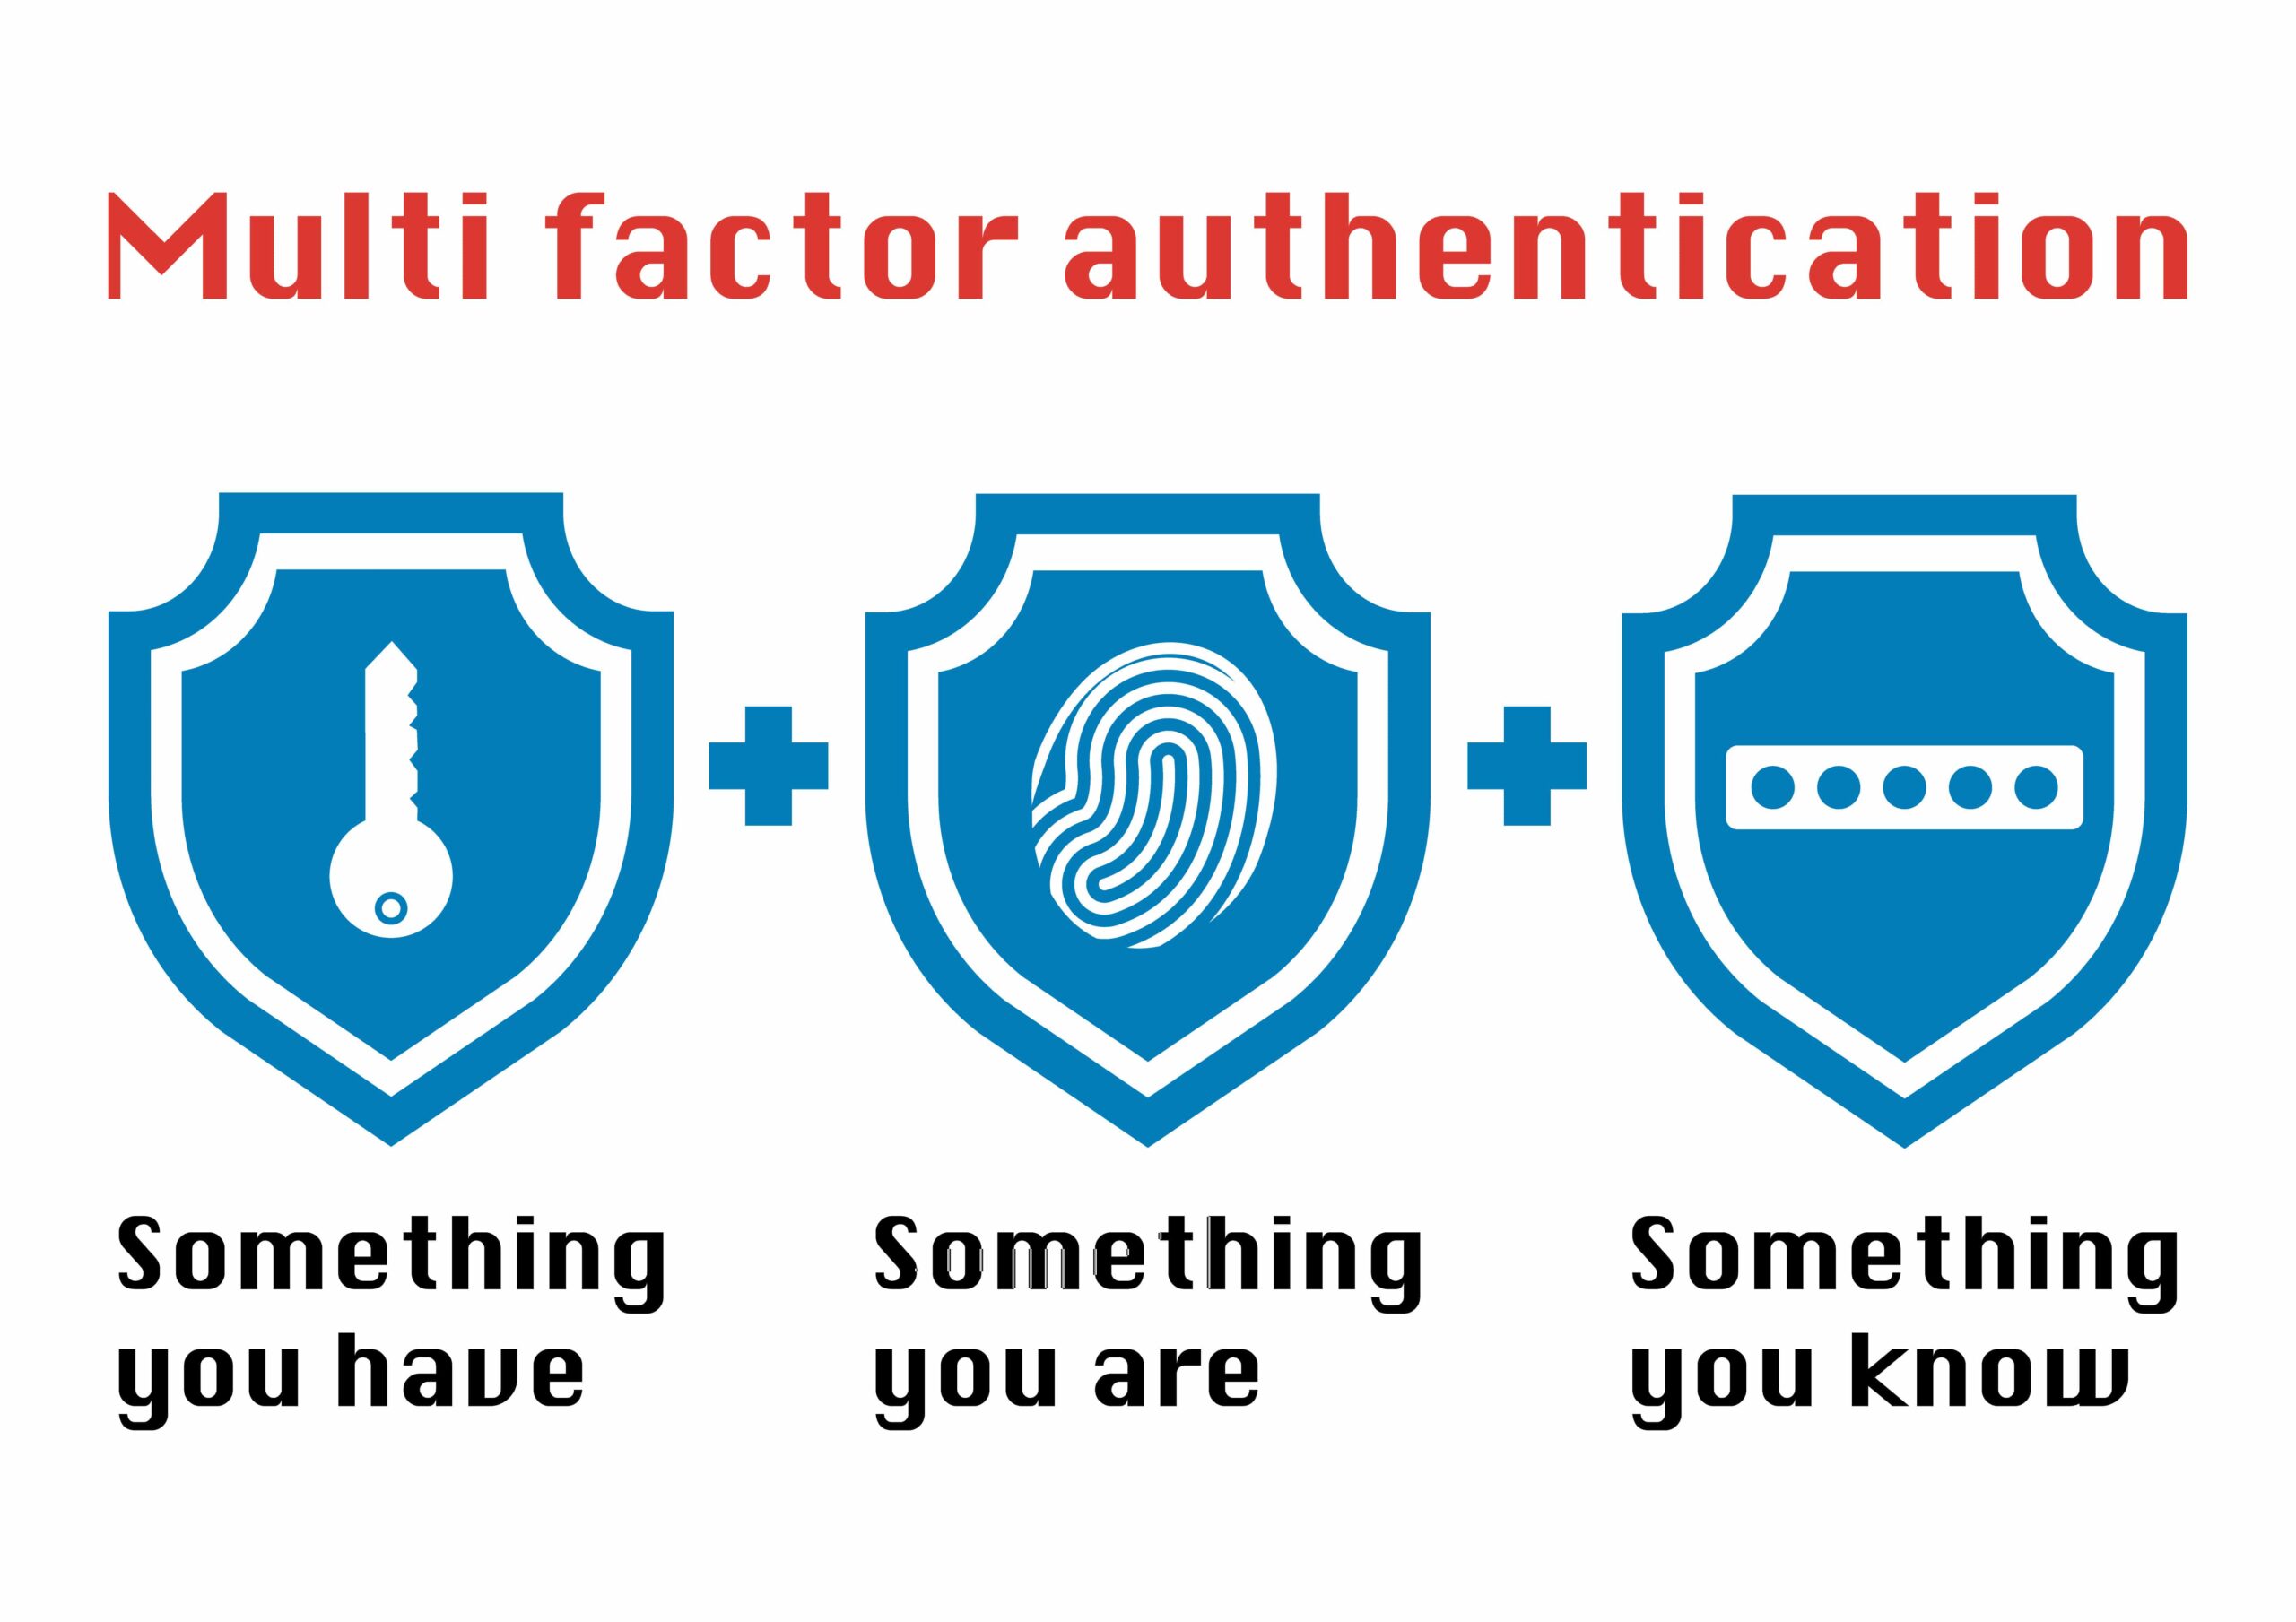 Mult-factor authentication